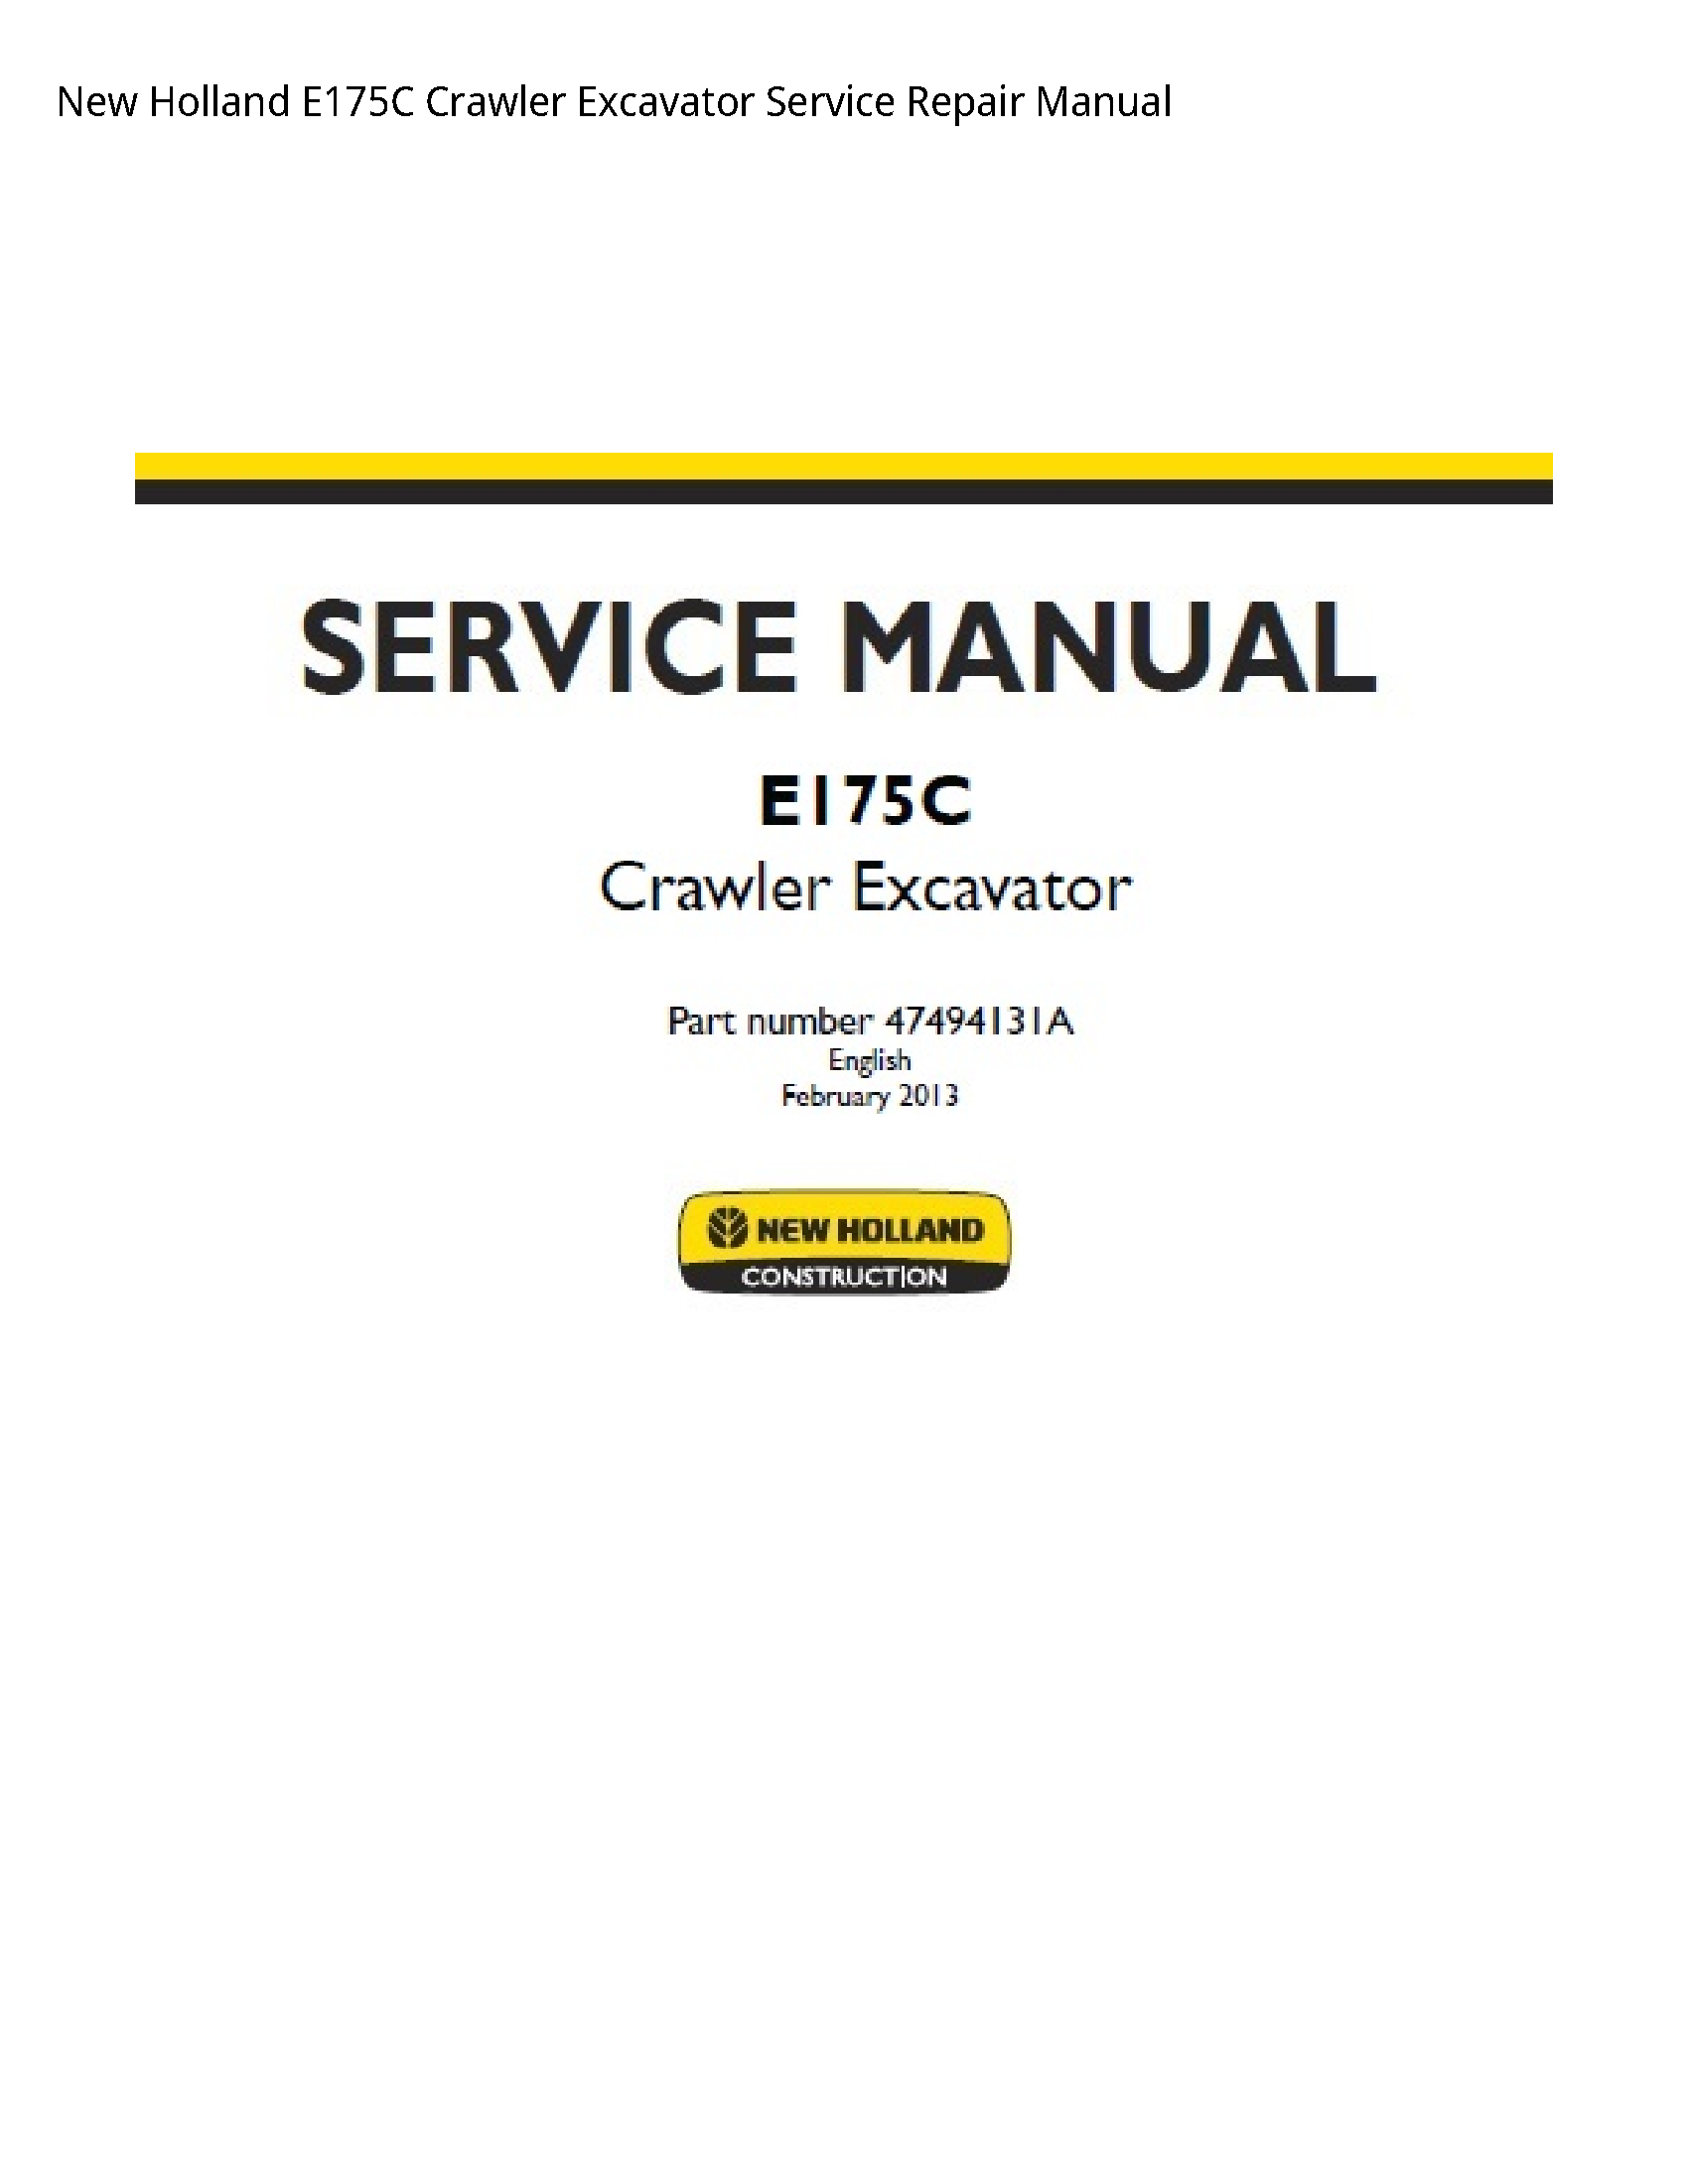 New Holland E175C Crawler Excavator manual